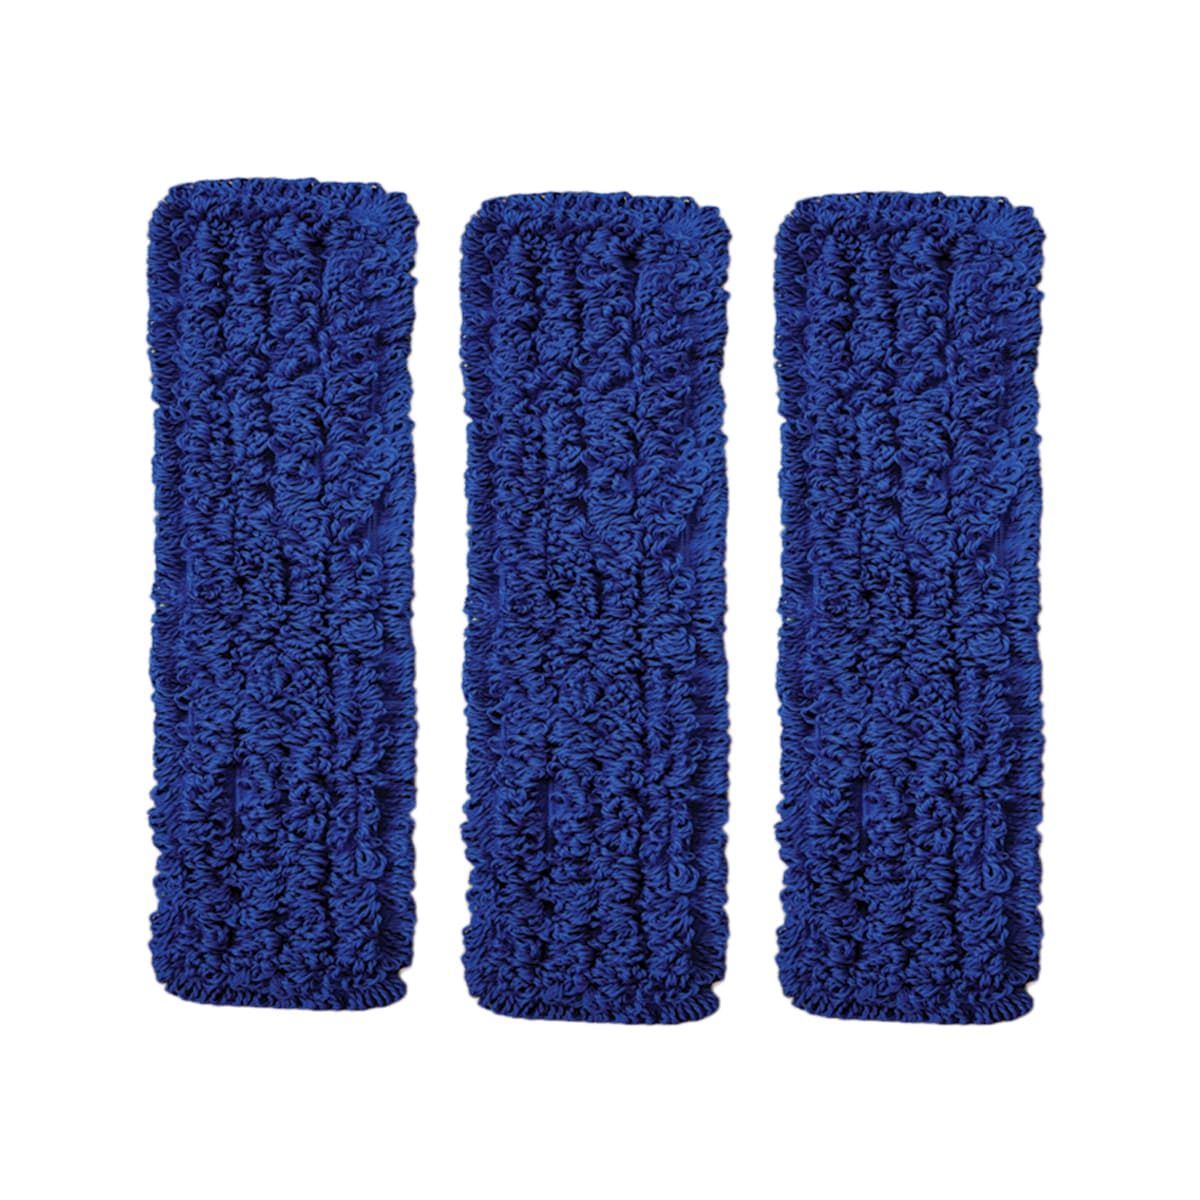 2x Cotton Floor Mop Heads Handle Blue Replacement Heavy Duty